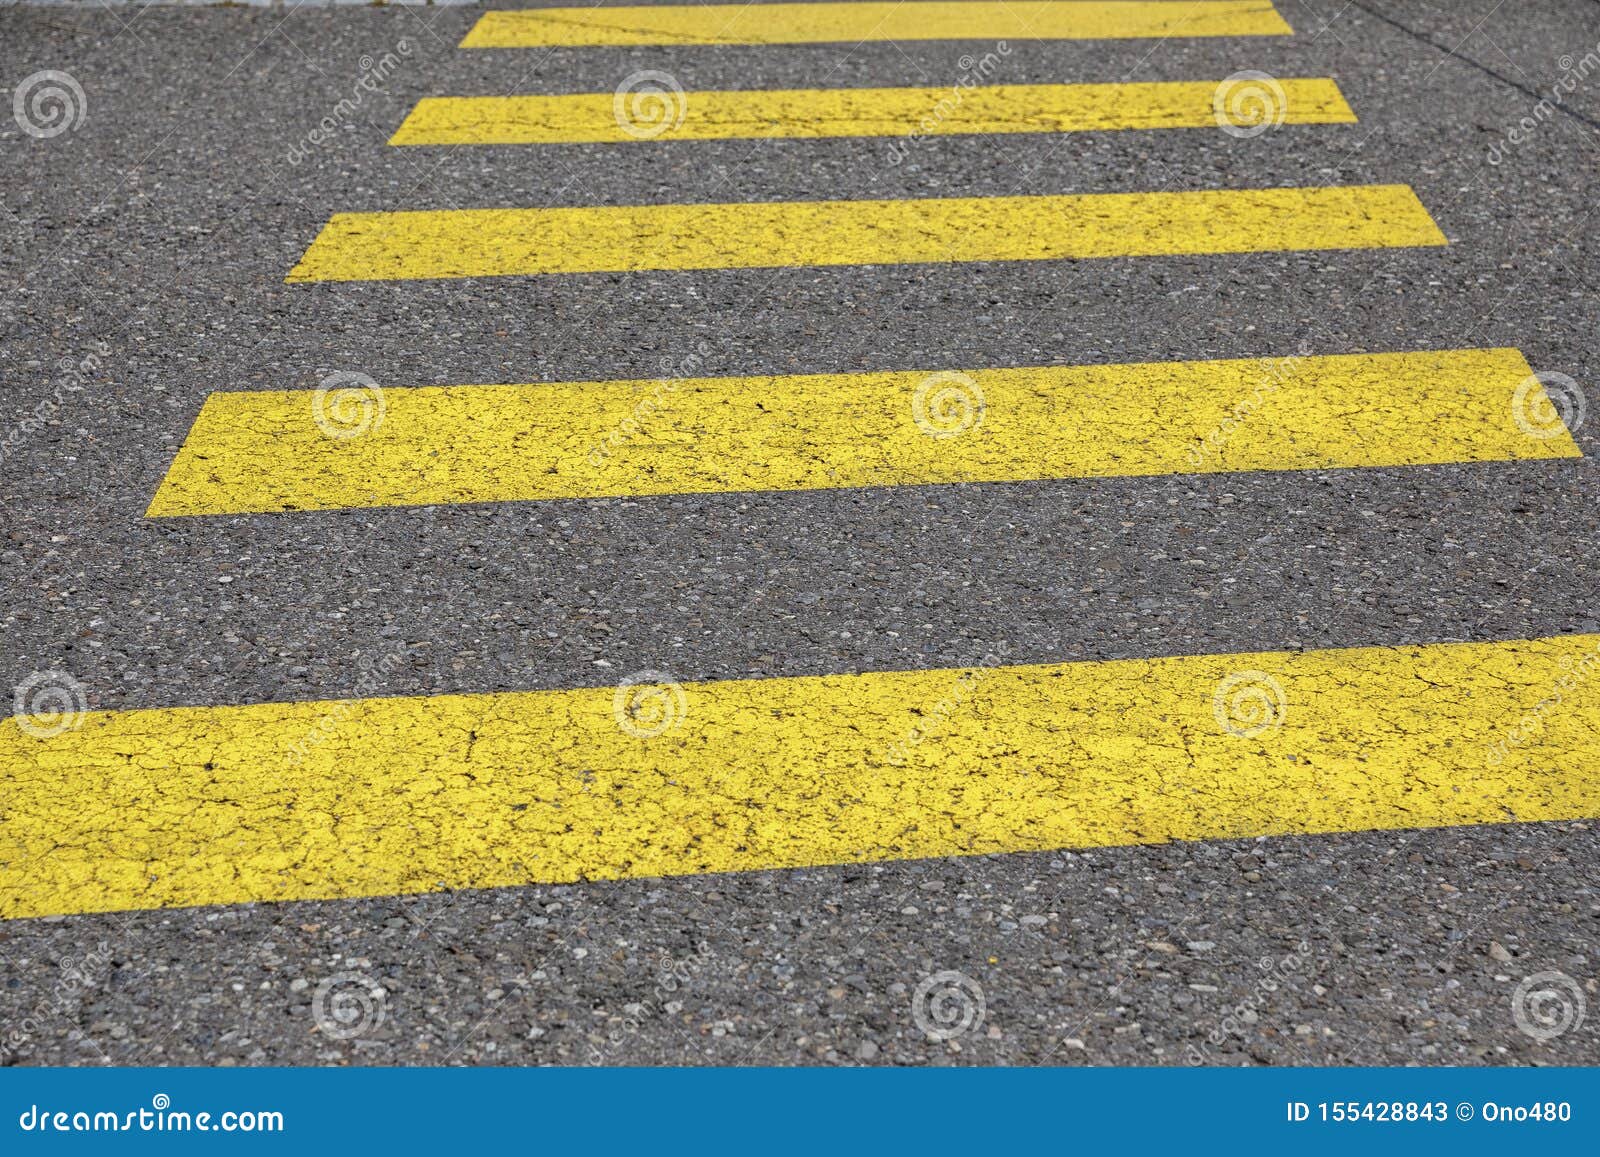 Crosswalk Yellow Lines On The Road. Zebra Yellow Pedestrian Crossing ...